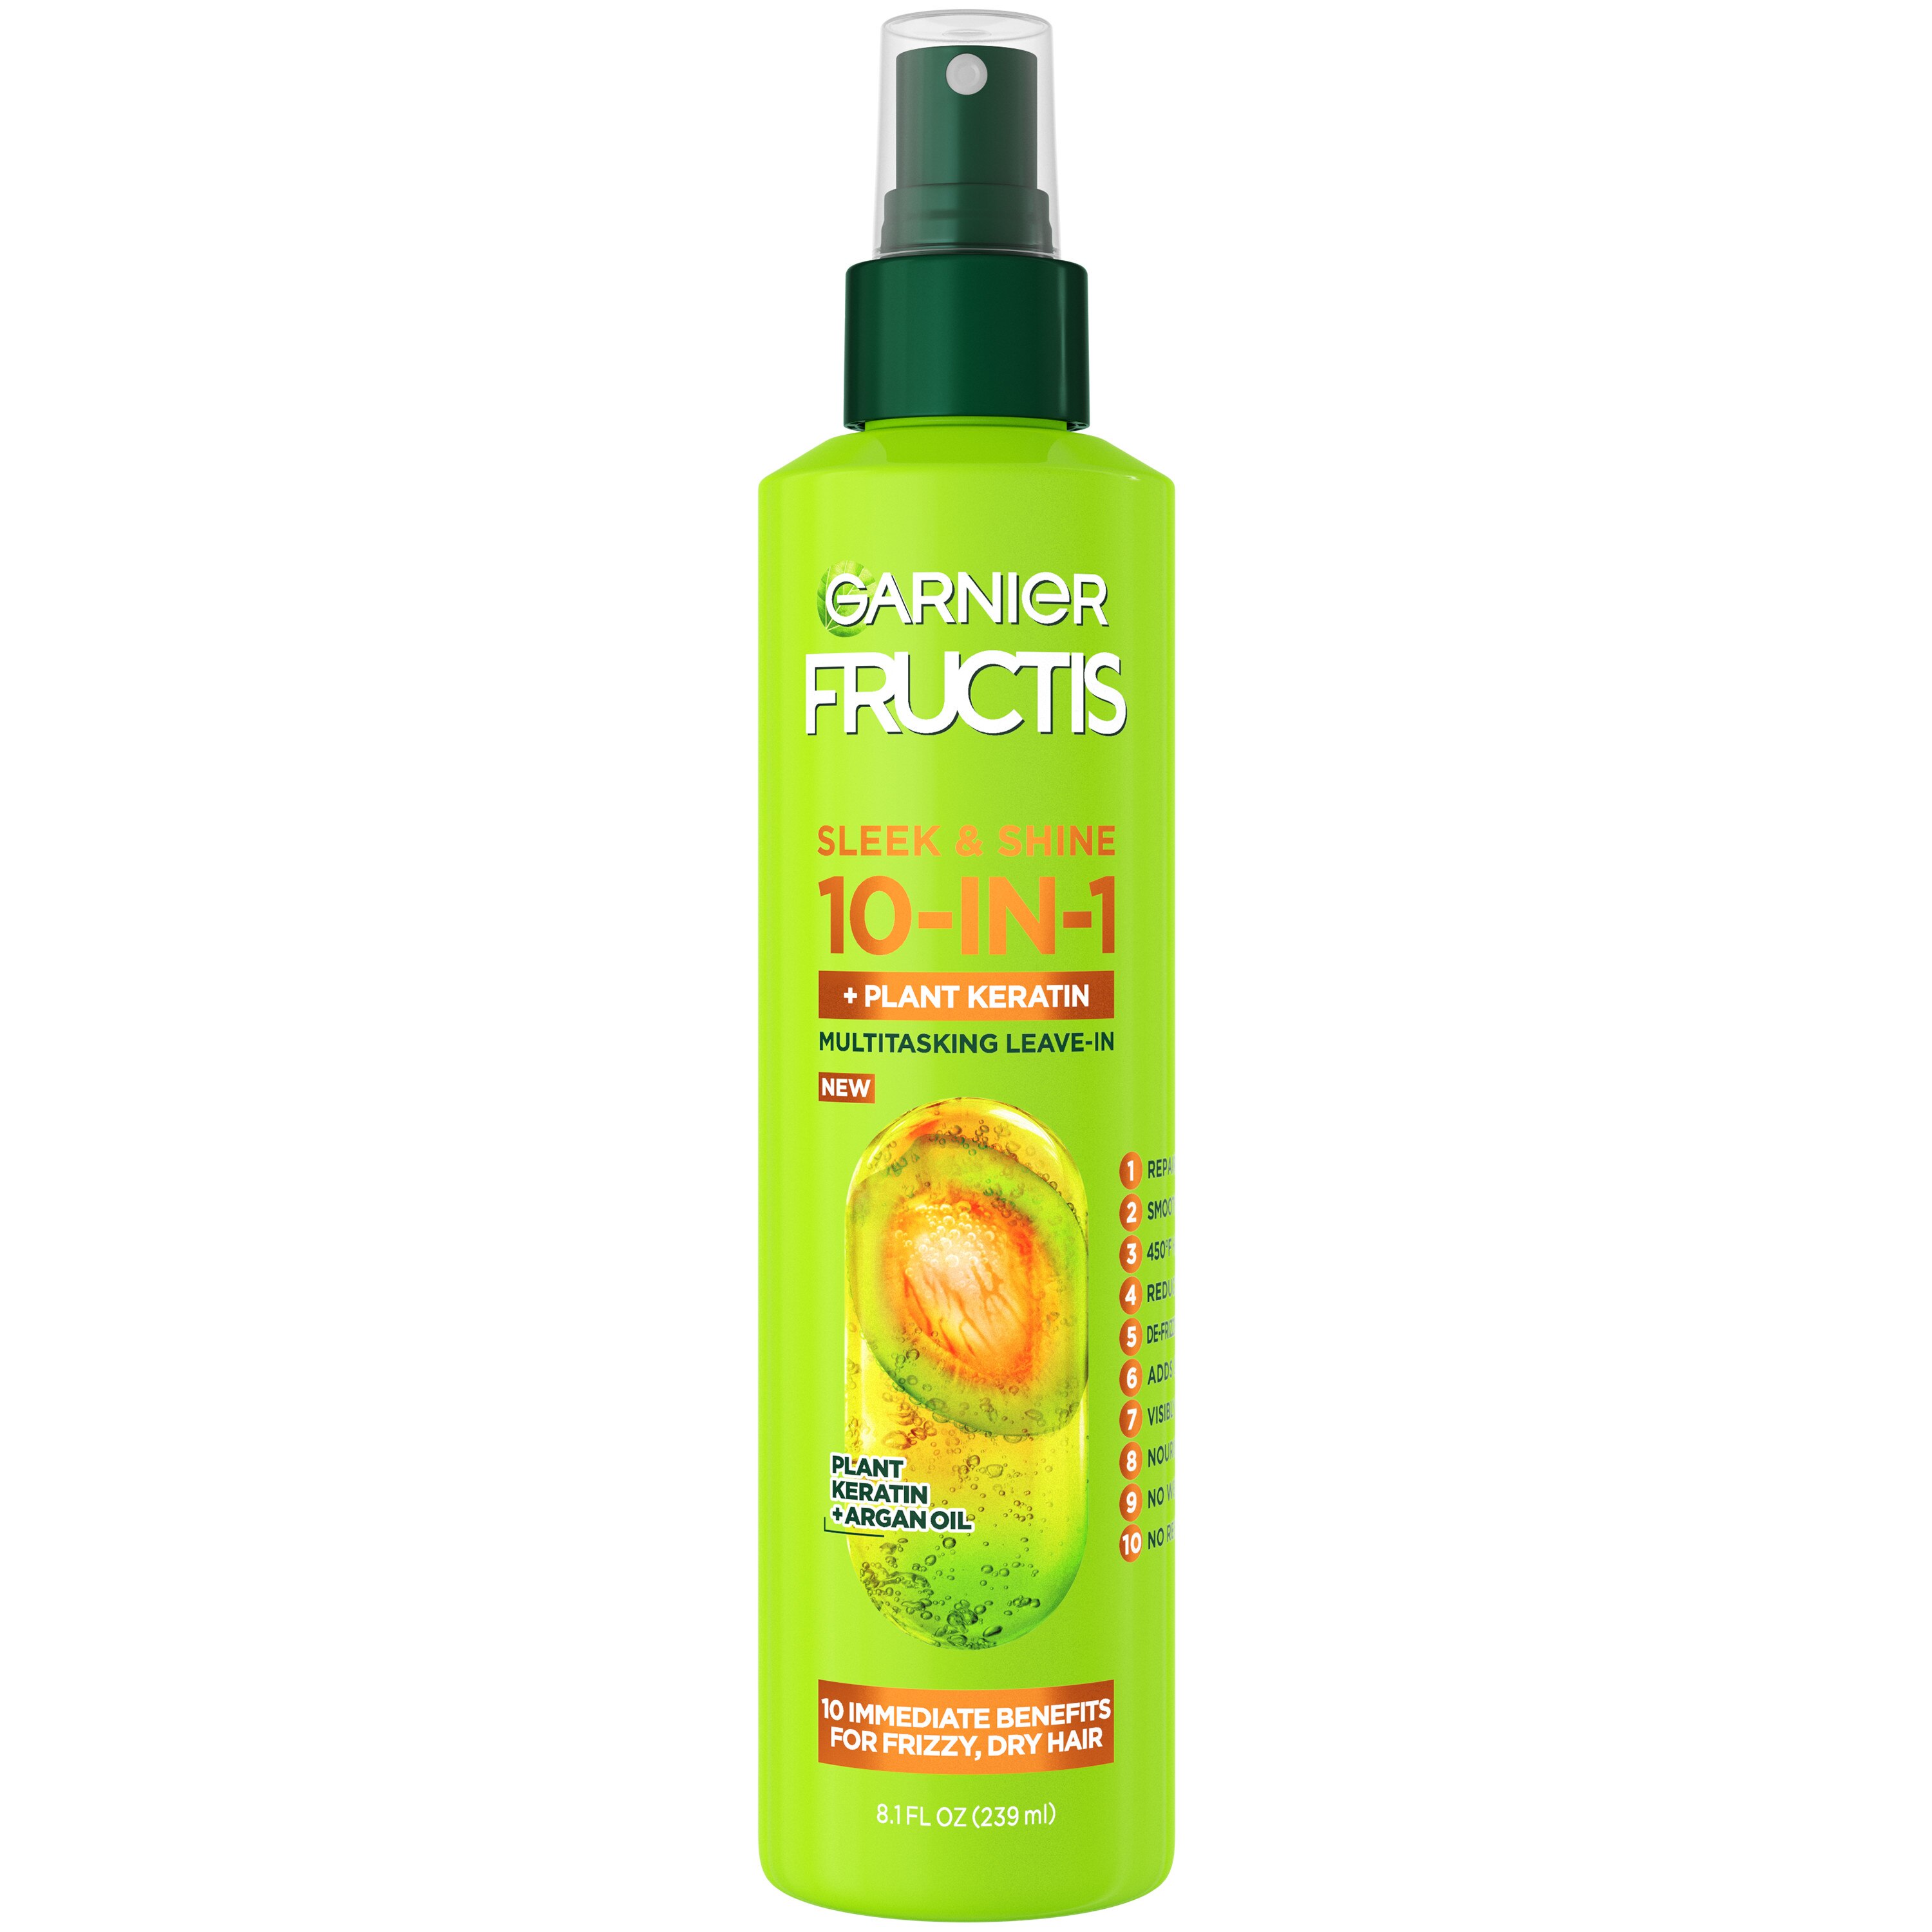 Garnier Fructis Sleek & Shine 10 in 1 Spray, for Frizzy, Dry Hair, 8.1 OZ